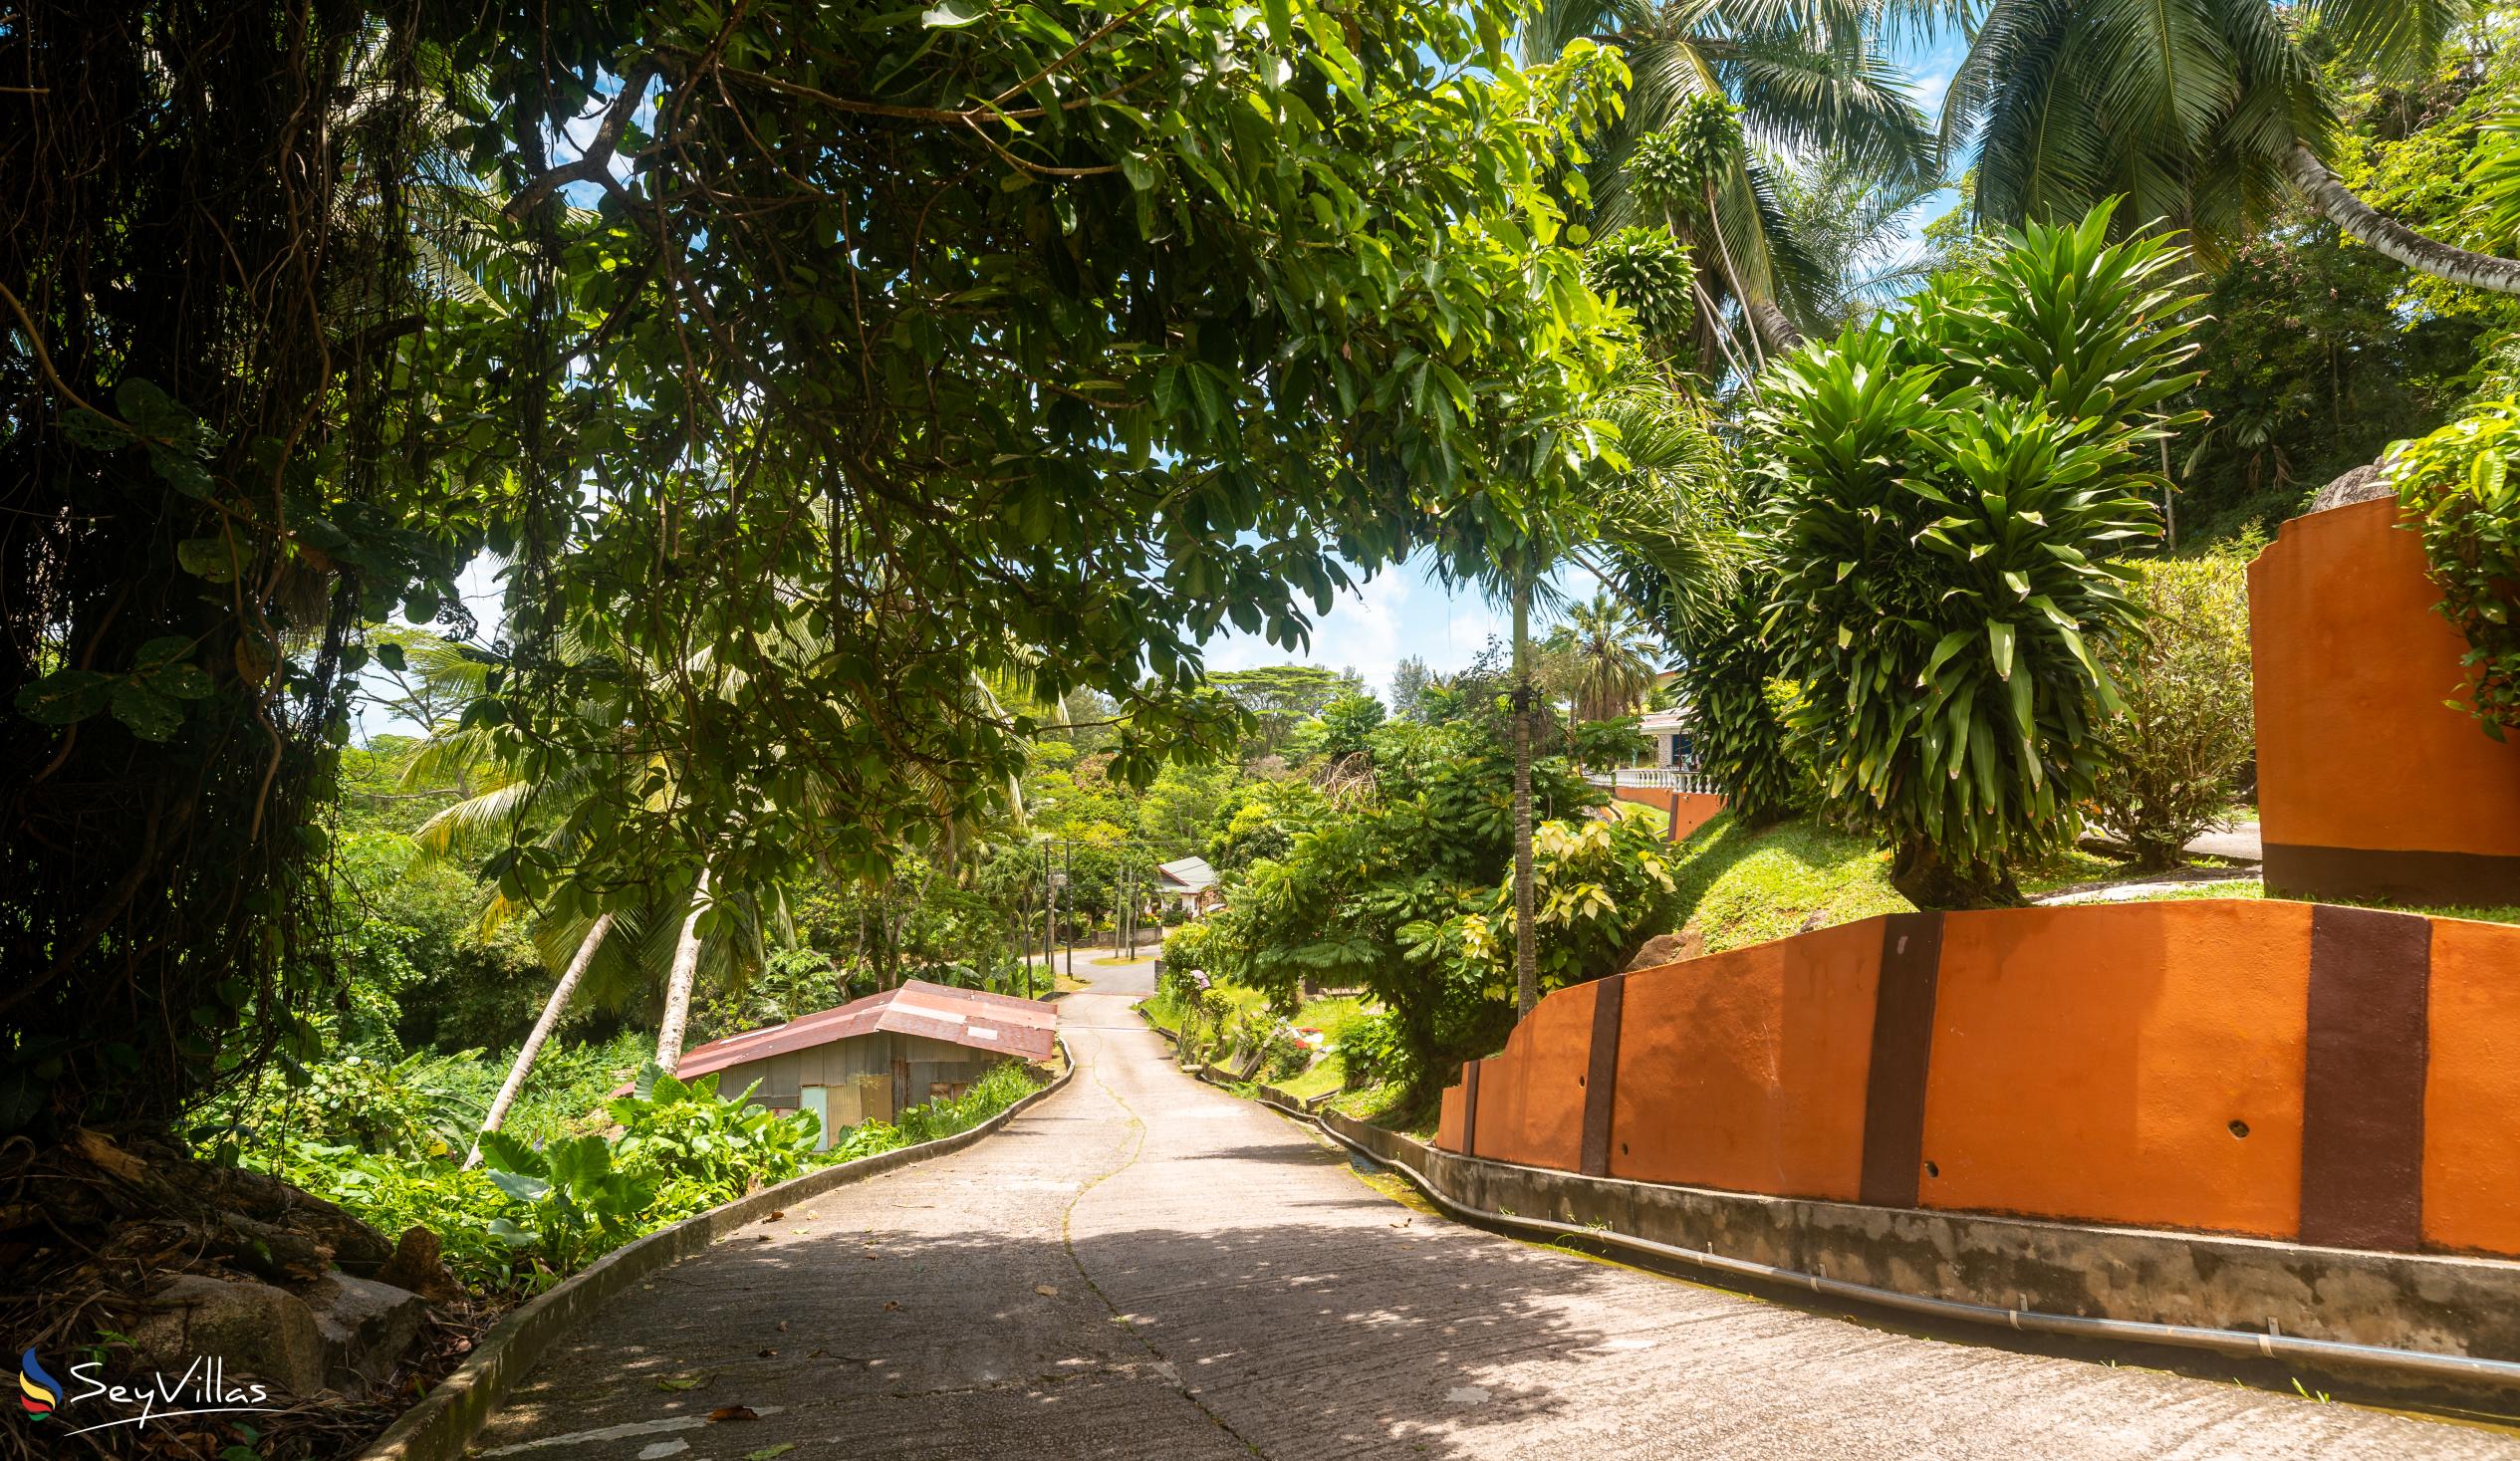 Foto 23: JAIDSS Holiday Apartments - Location - Mahé (Seychelles)